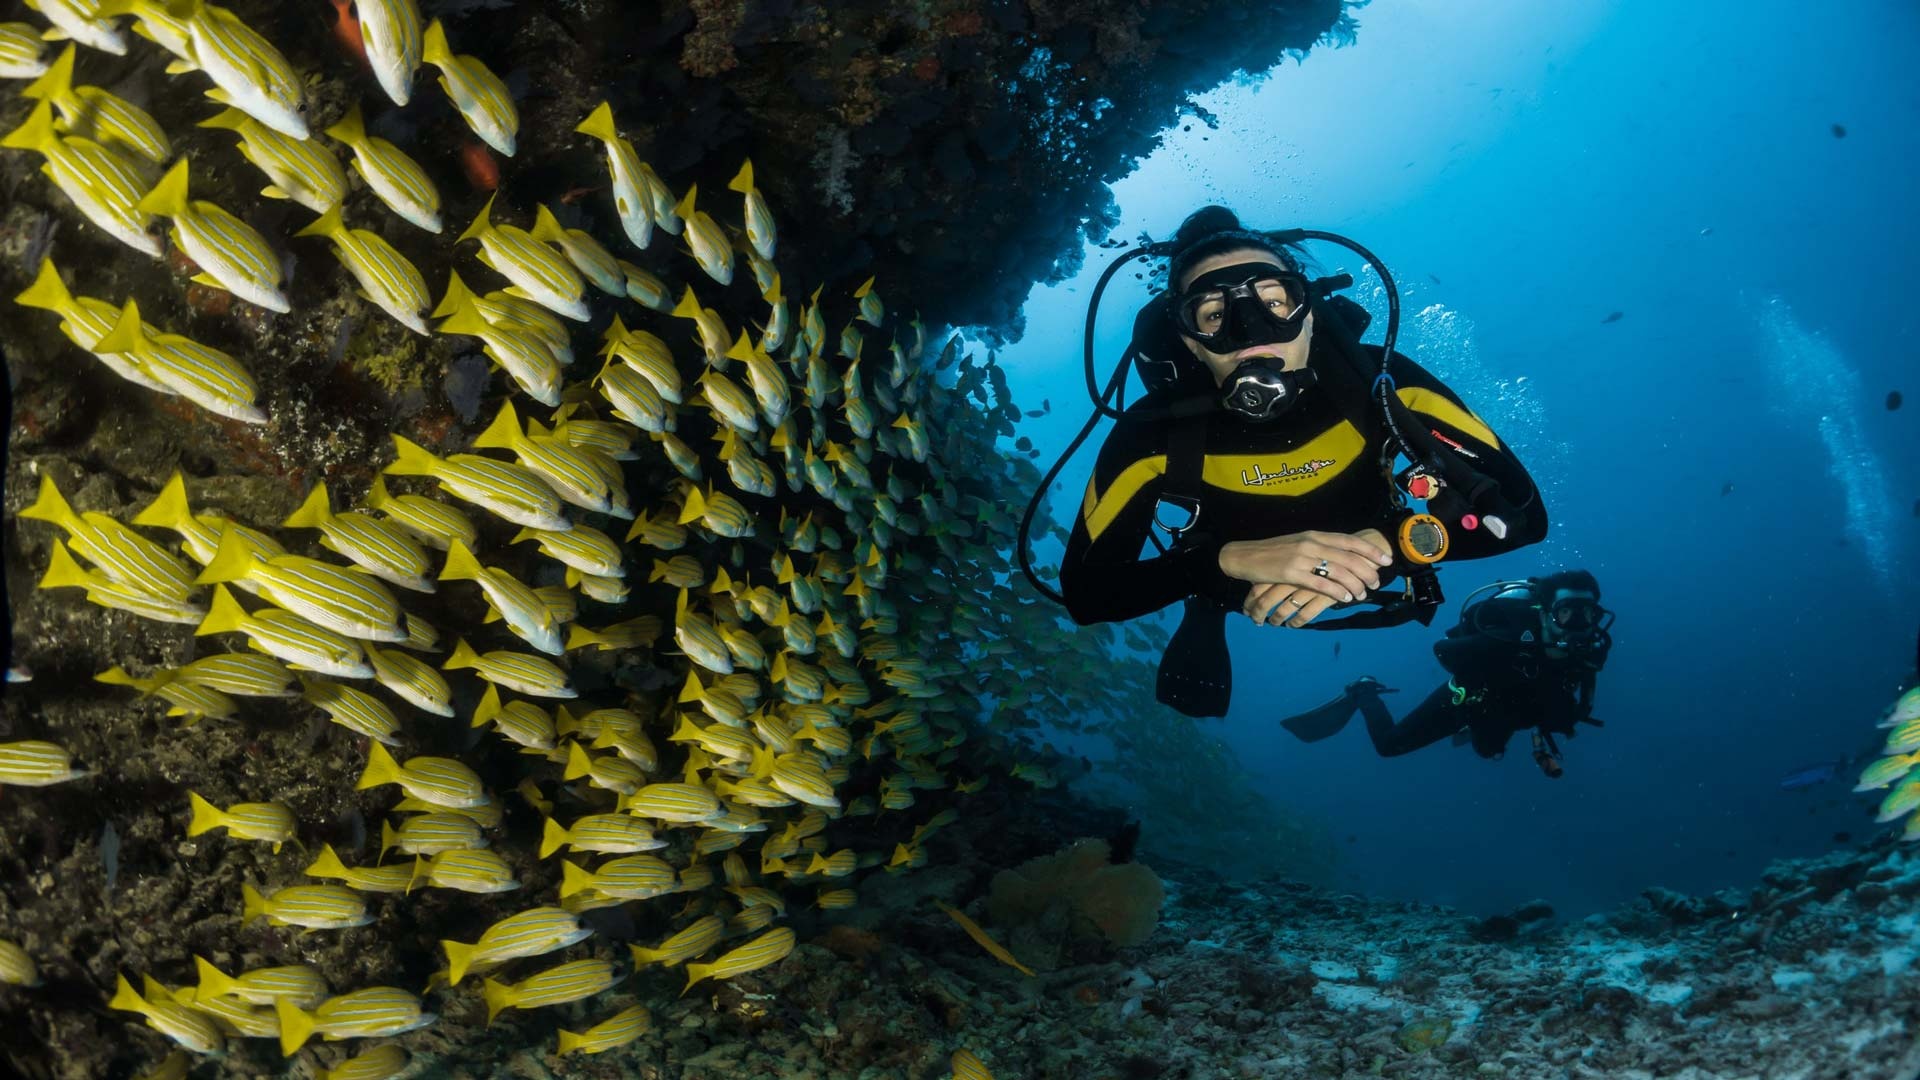 Scuba Diving: Divers move into the cave near the school of sea fish. 1920x1080 Full HD Wallpaper.